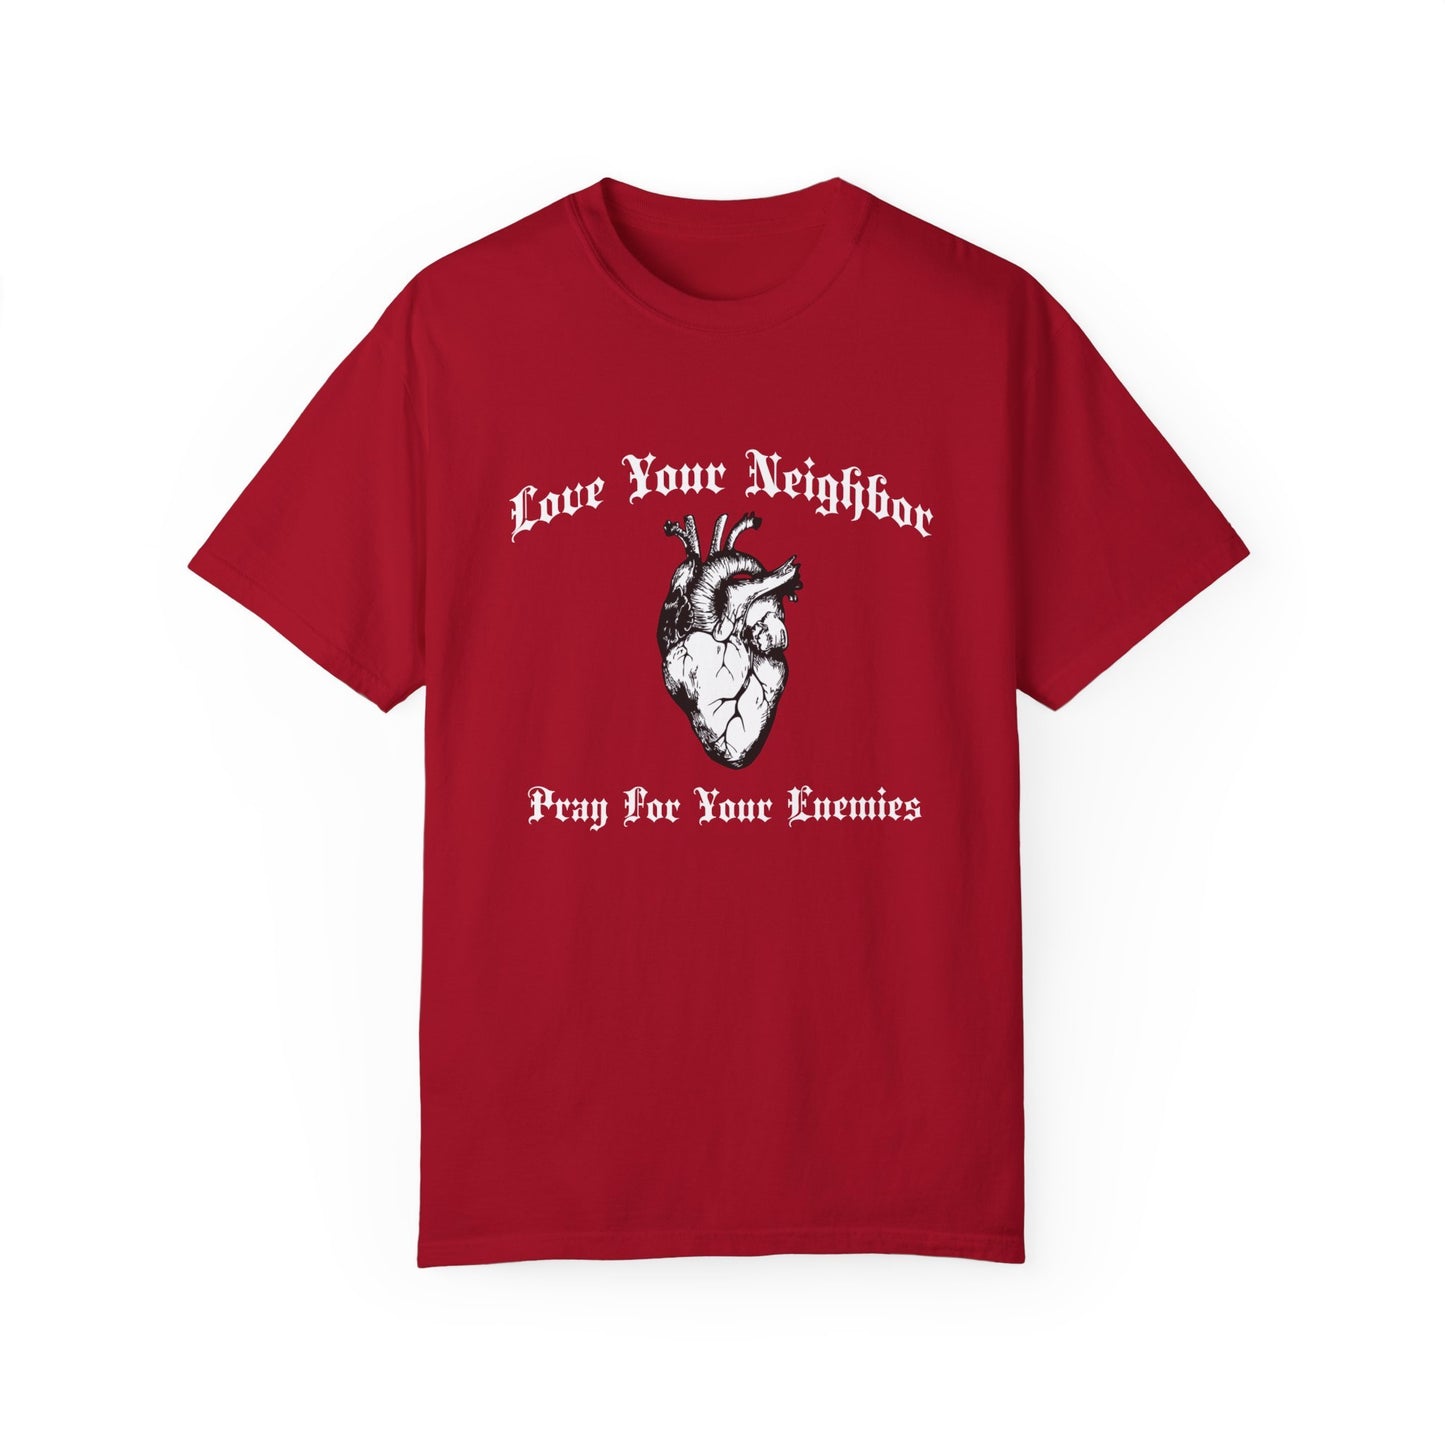 "LOVE YOUR NEIGHBOR" Shirt